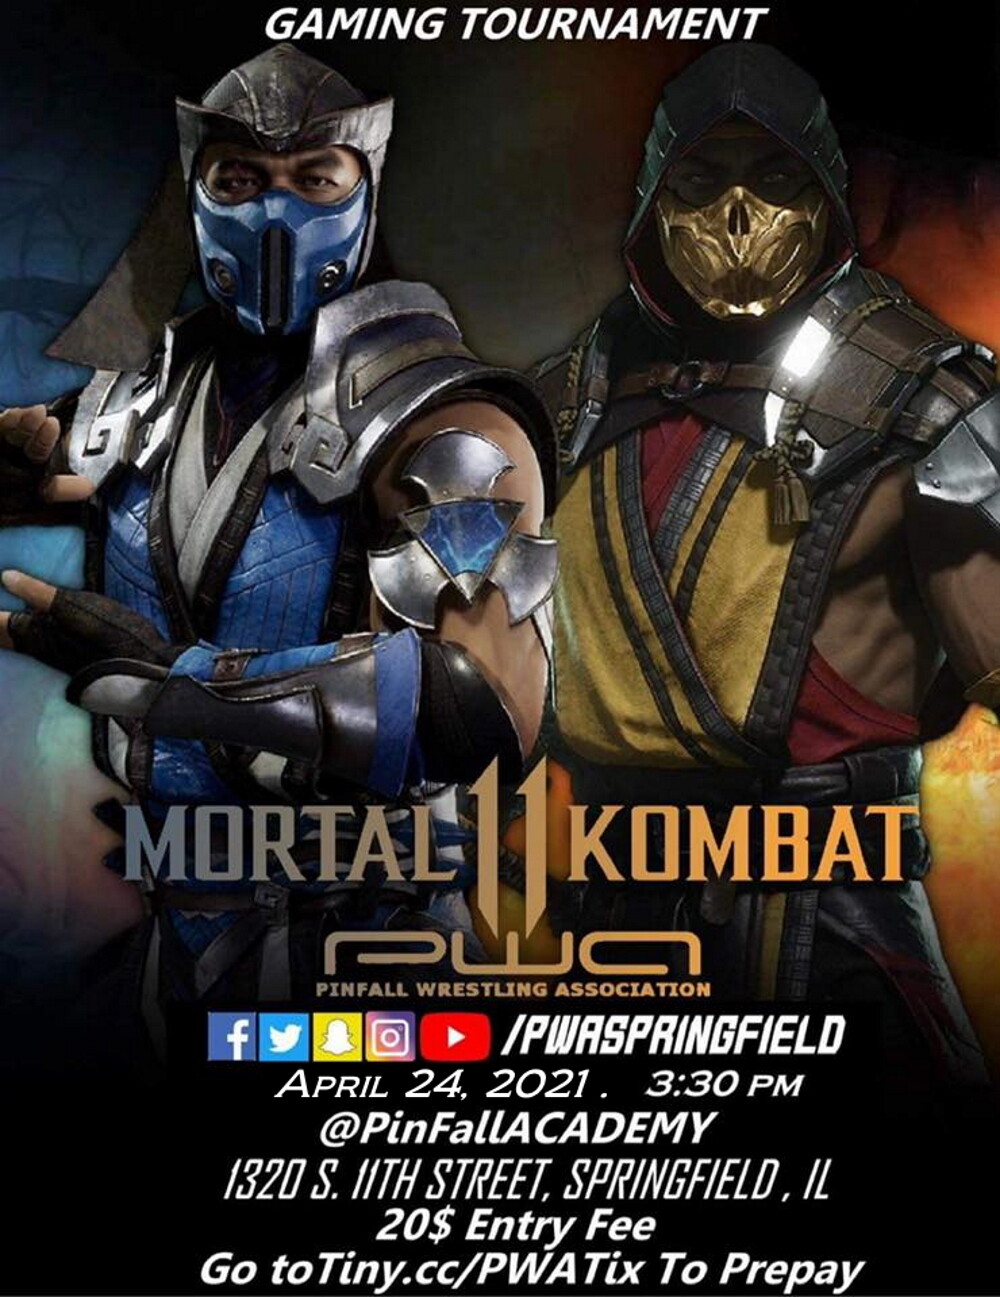 Mortal Kombat 11 Gaming Tournament 4/24/21